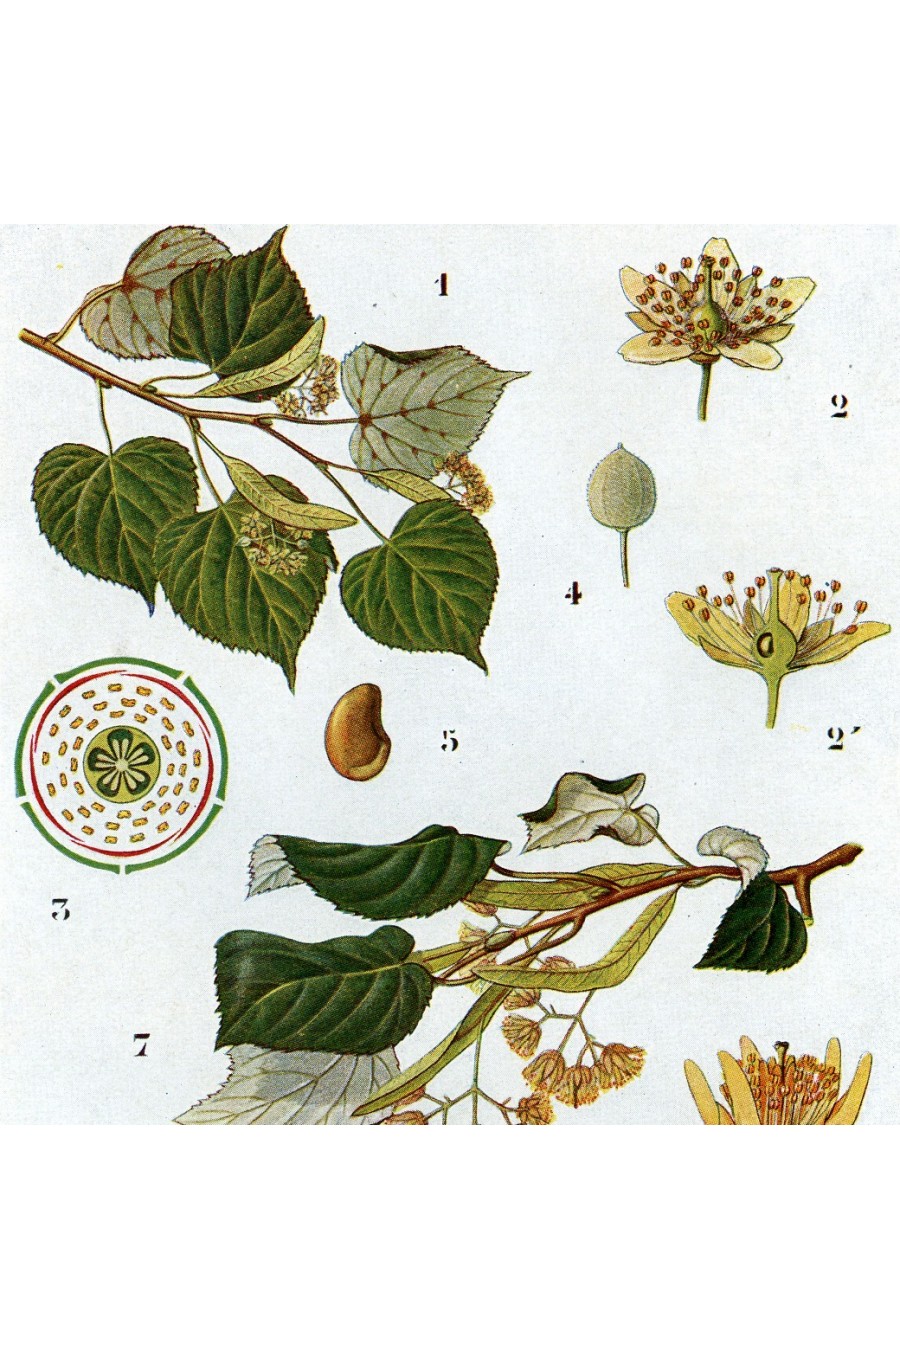 Tilleul dit de Carpentras inflorescences 30g BIO - Herbatica